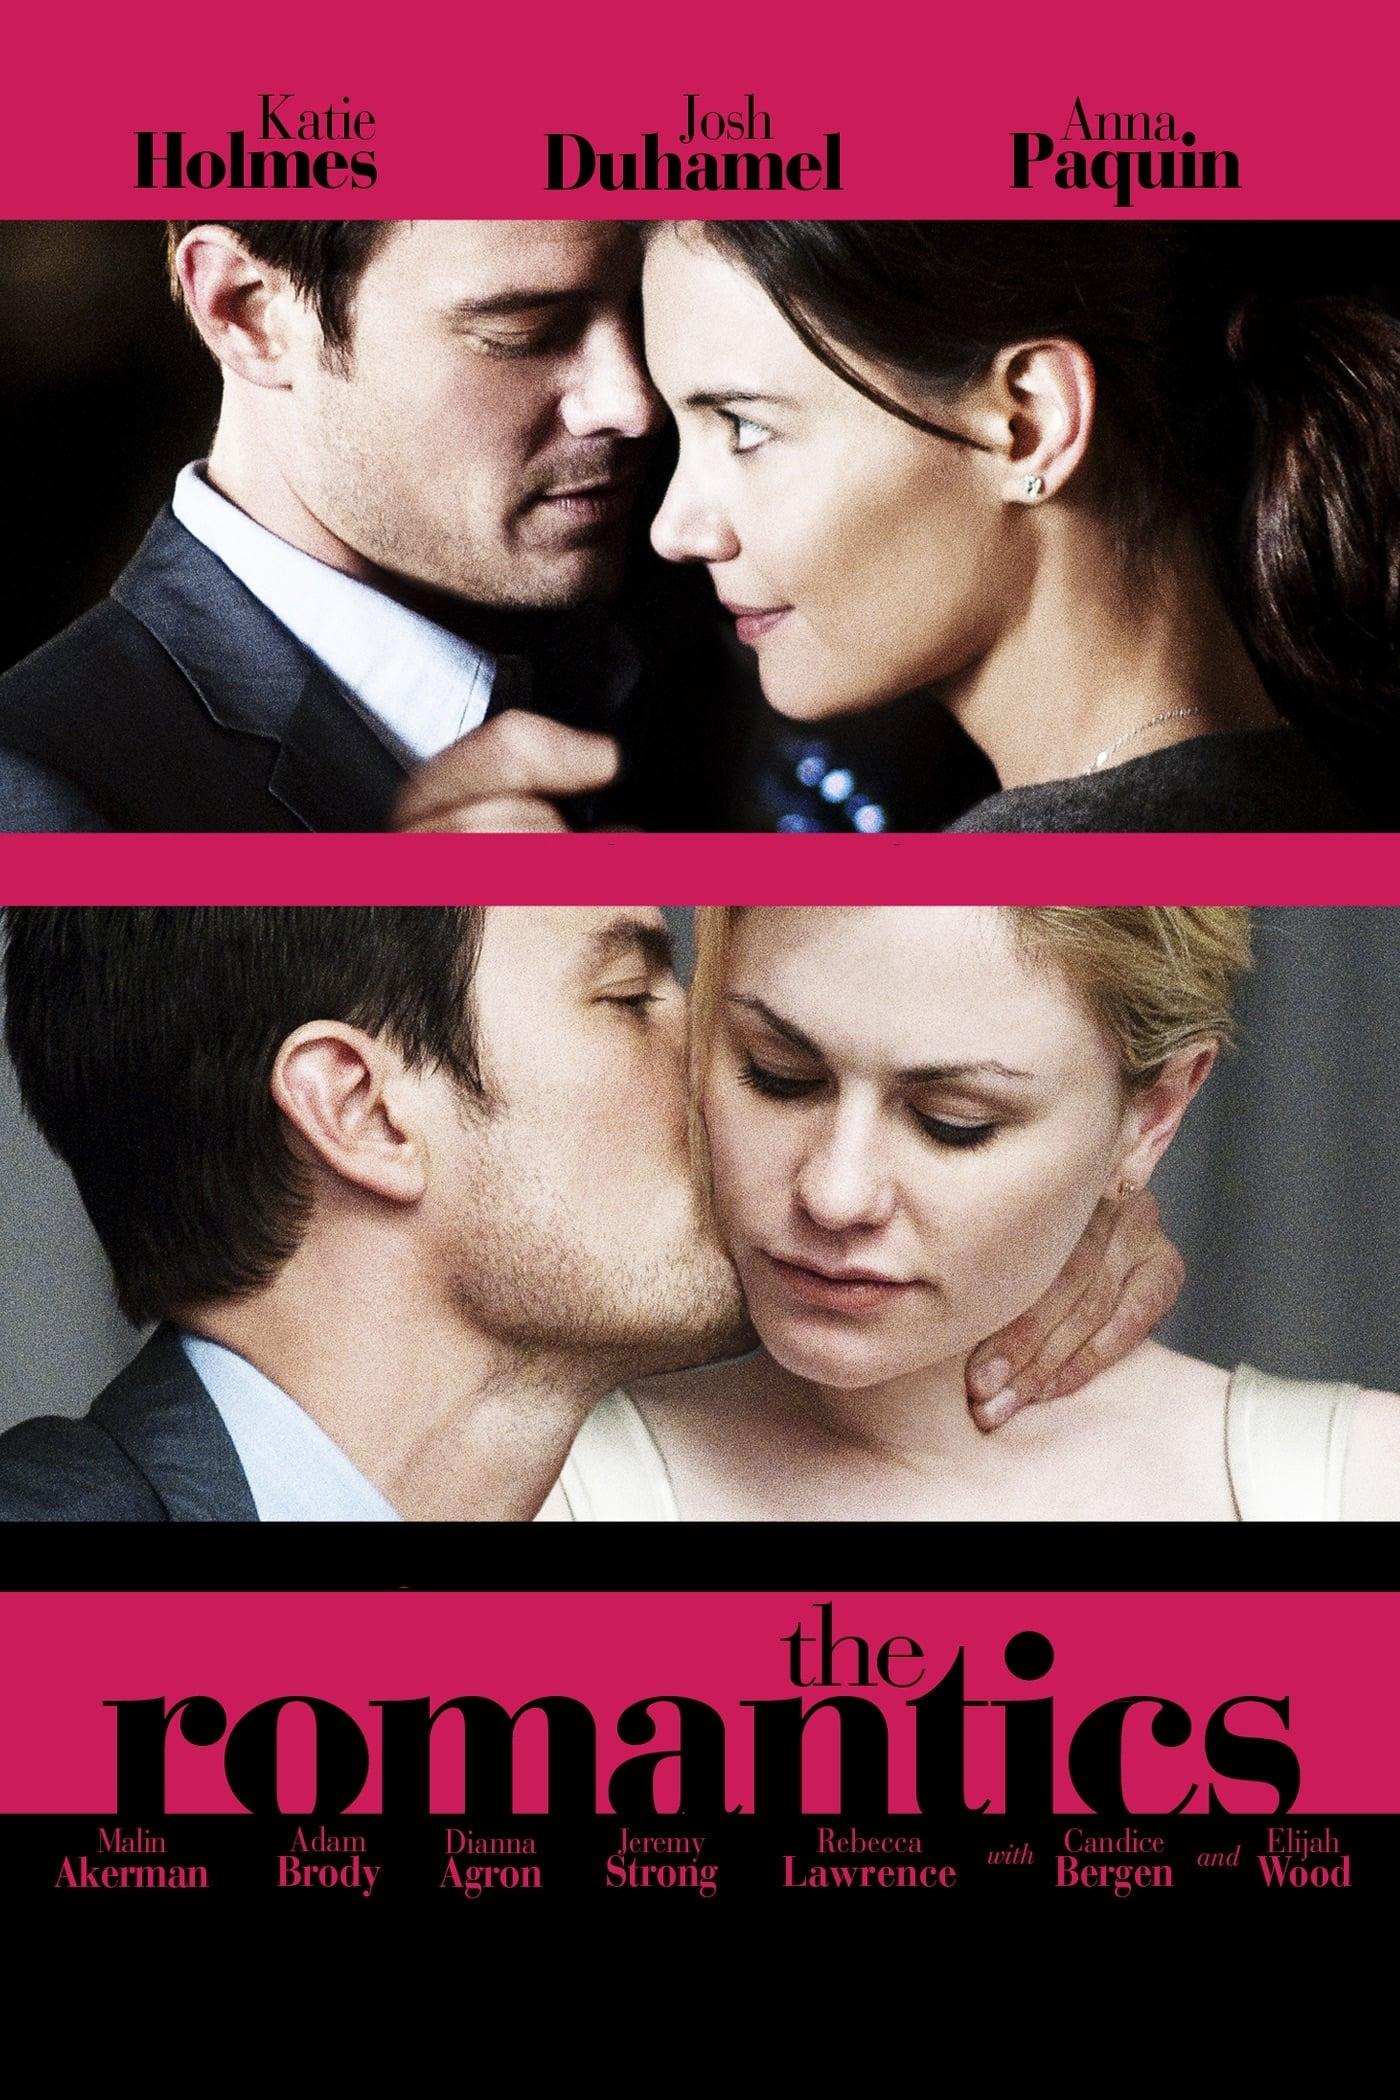 The Romantics poster